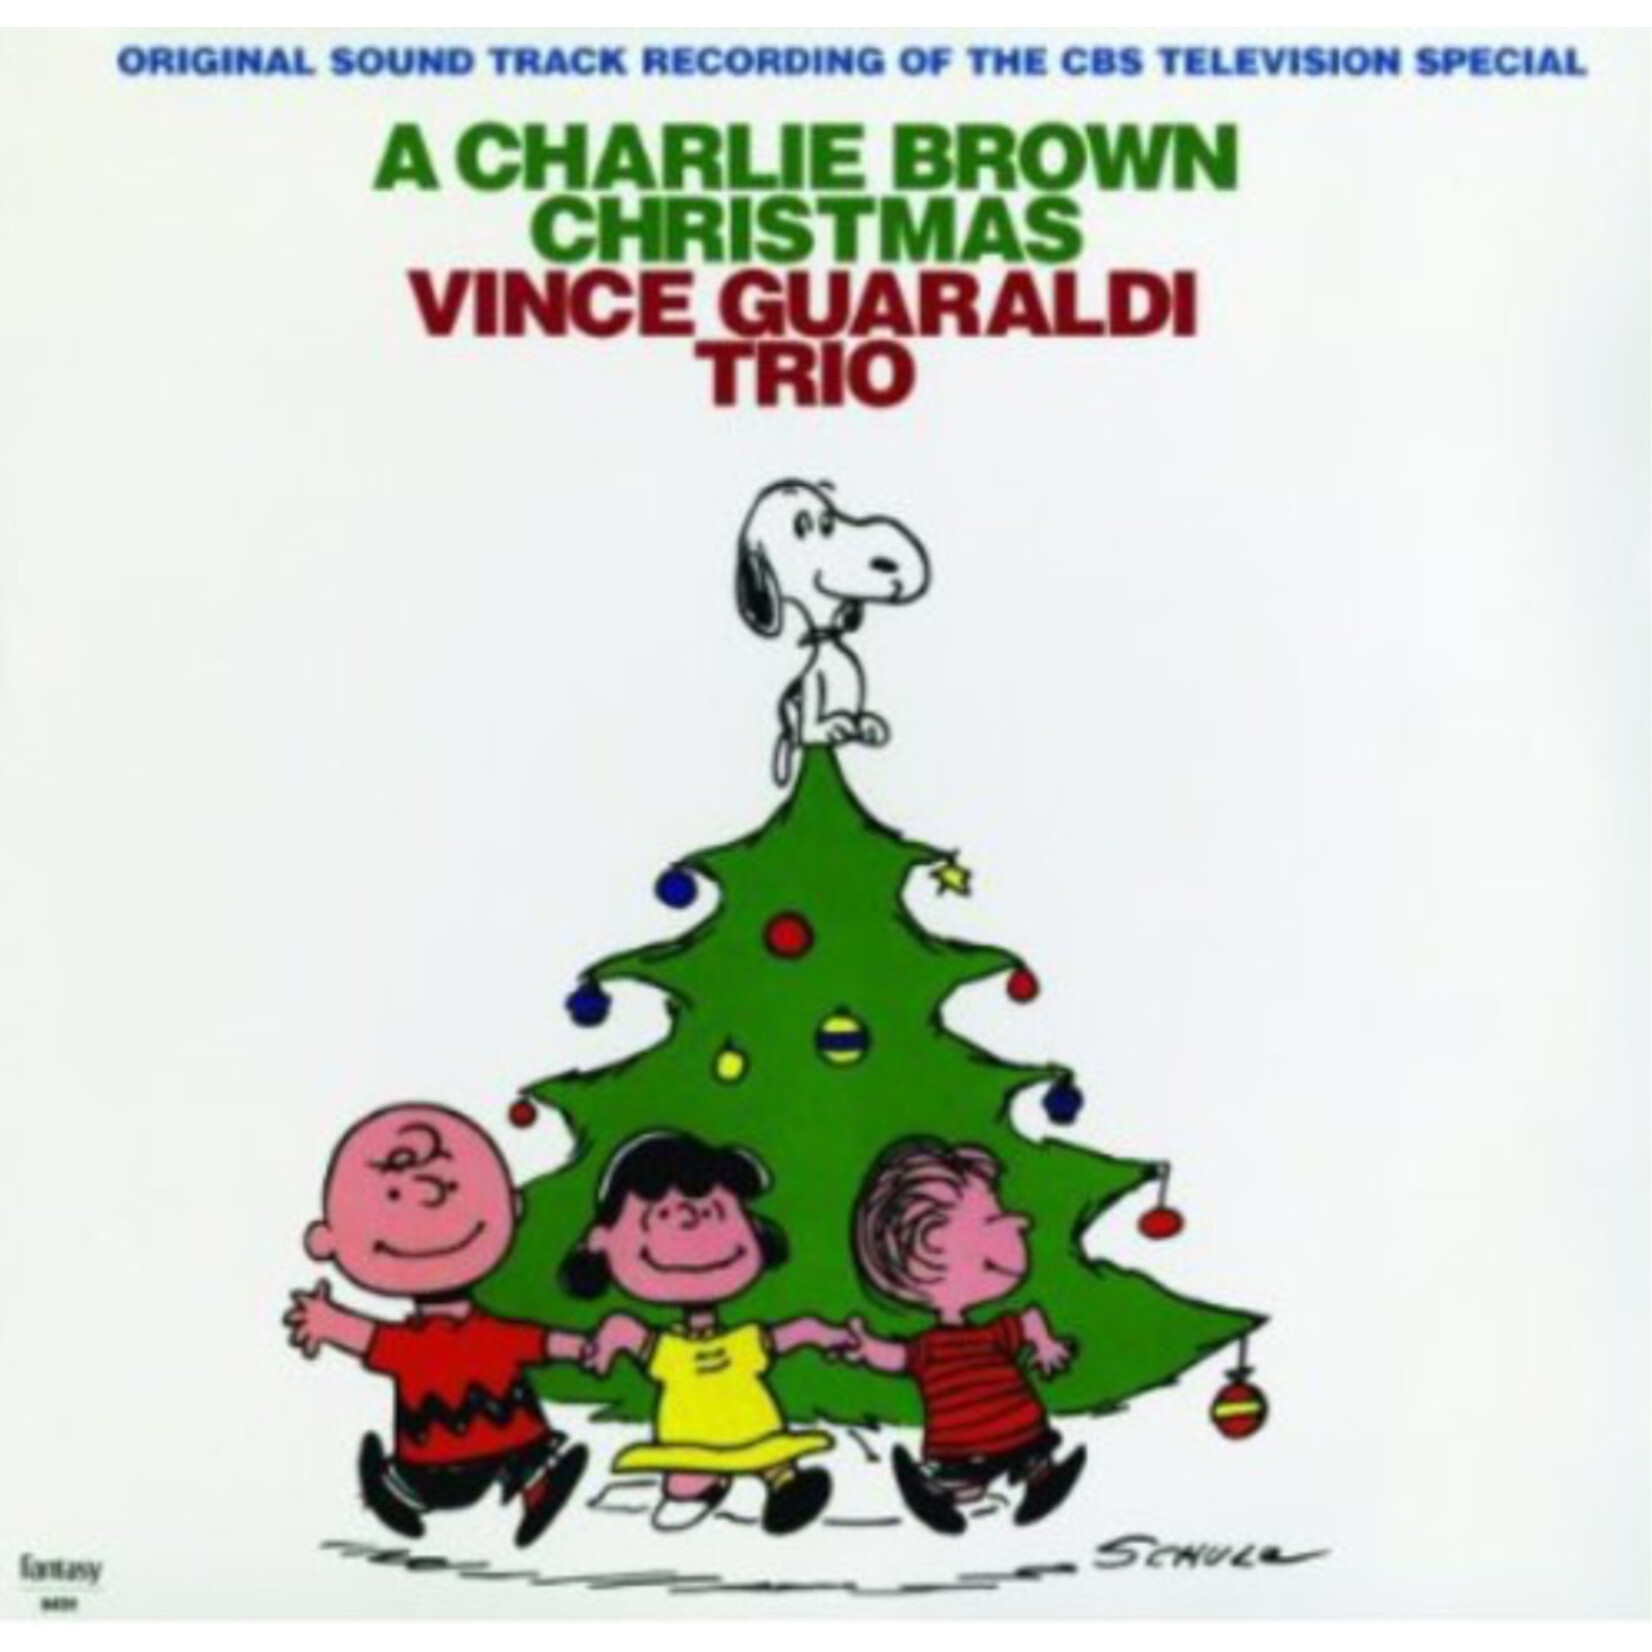 Vince Guaraldi Trio - A Charlie Brown Christmas - FAN8431 - Vinyl LP (NEW)